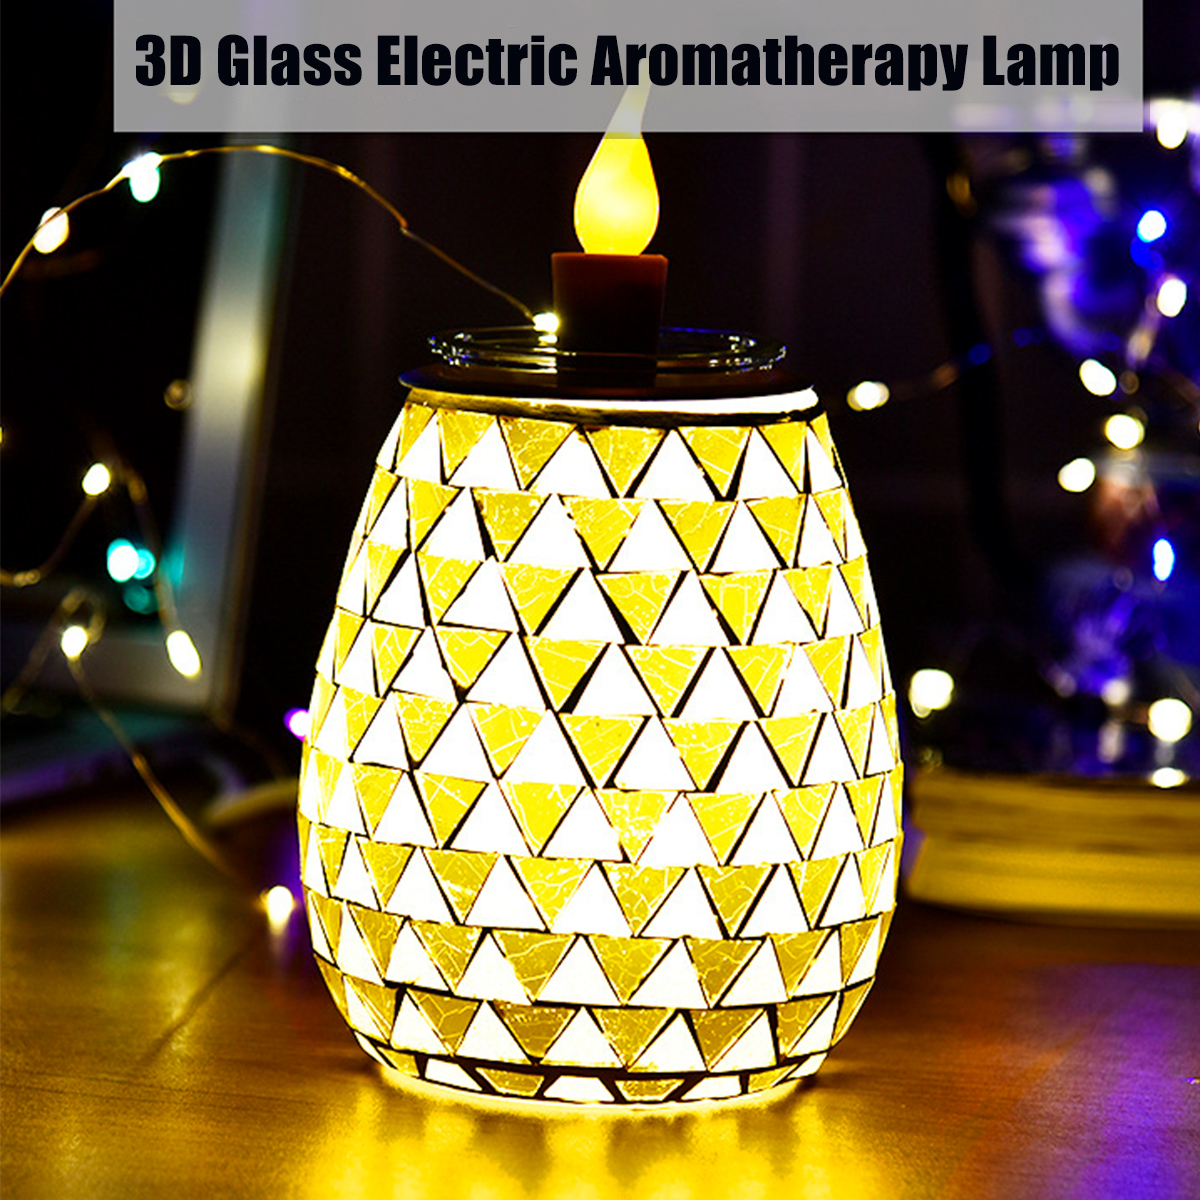 3D-Glass-Electric-Aromatherapy-Lamp-Triangle-Pattern-Warm-White-Lights-Home-Aromatherapy-Light-1837761-6